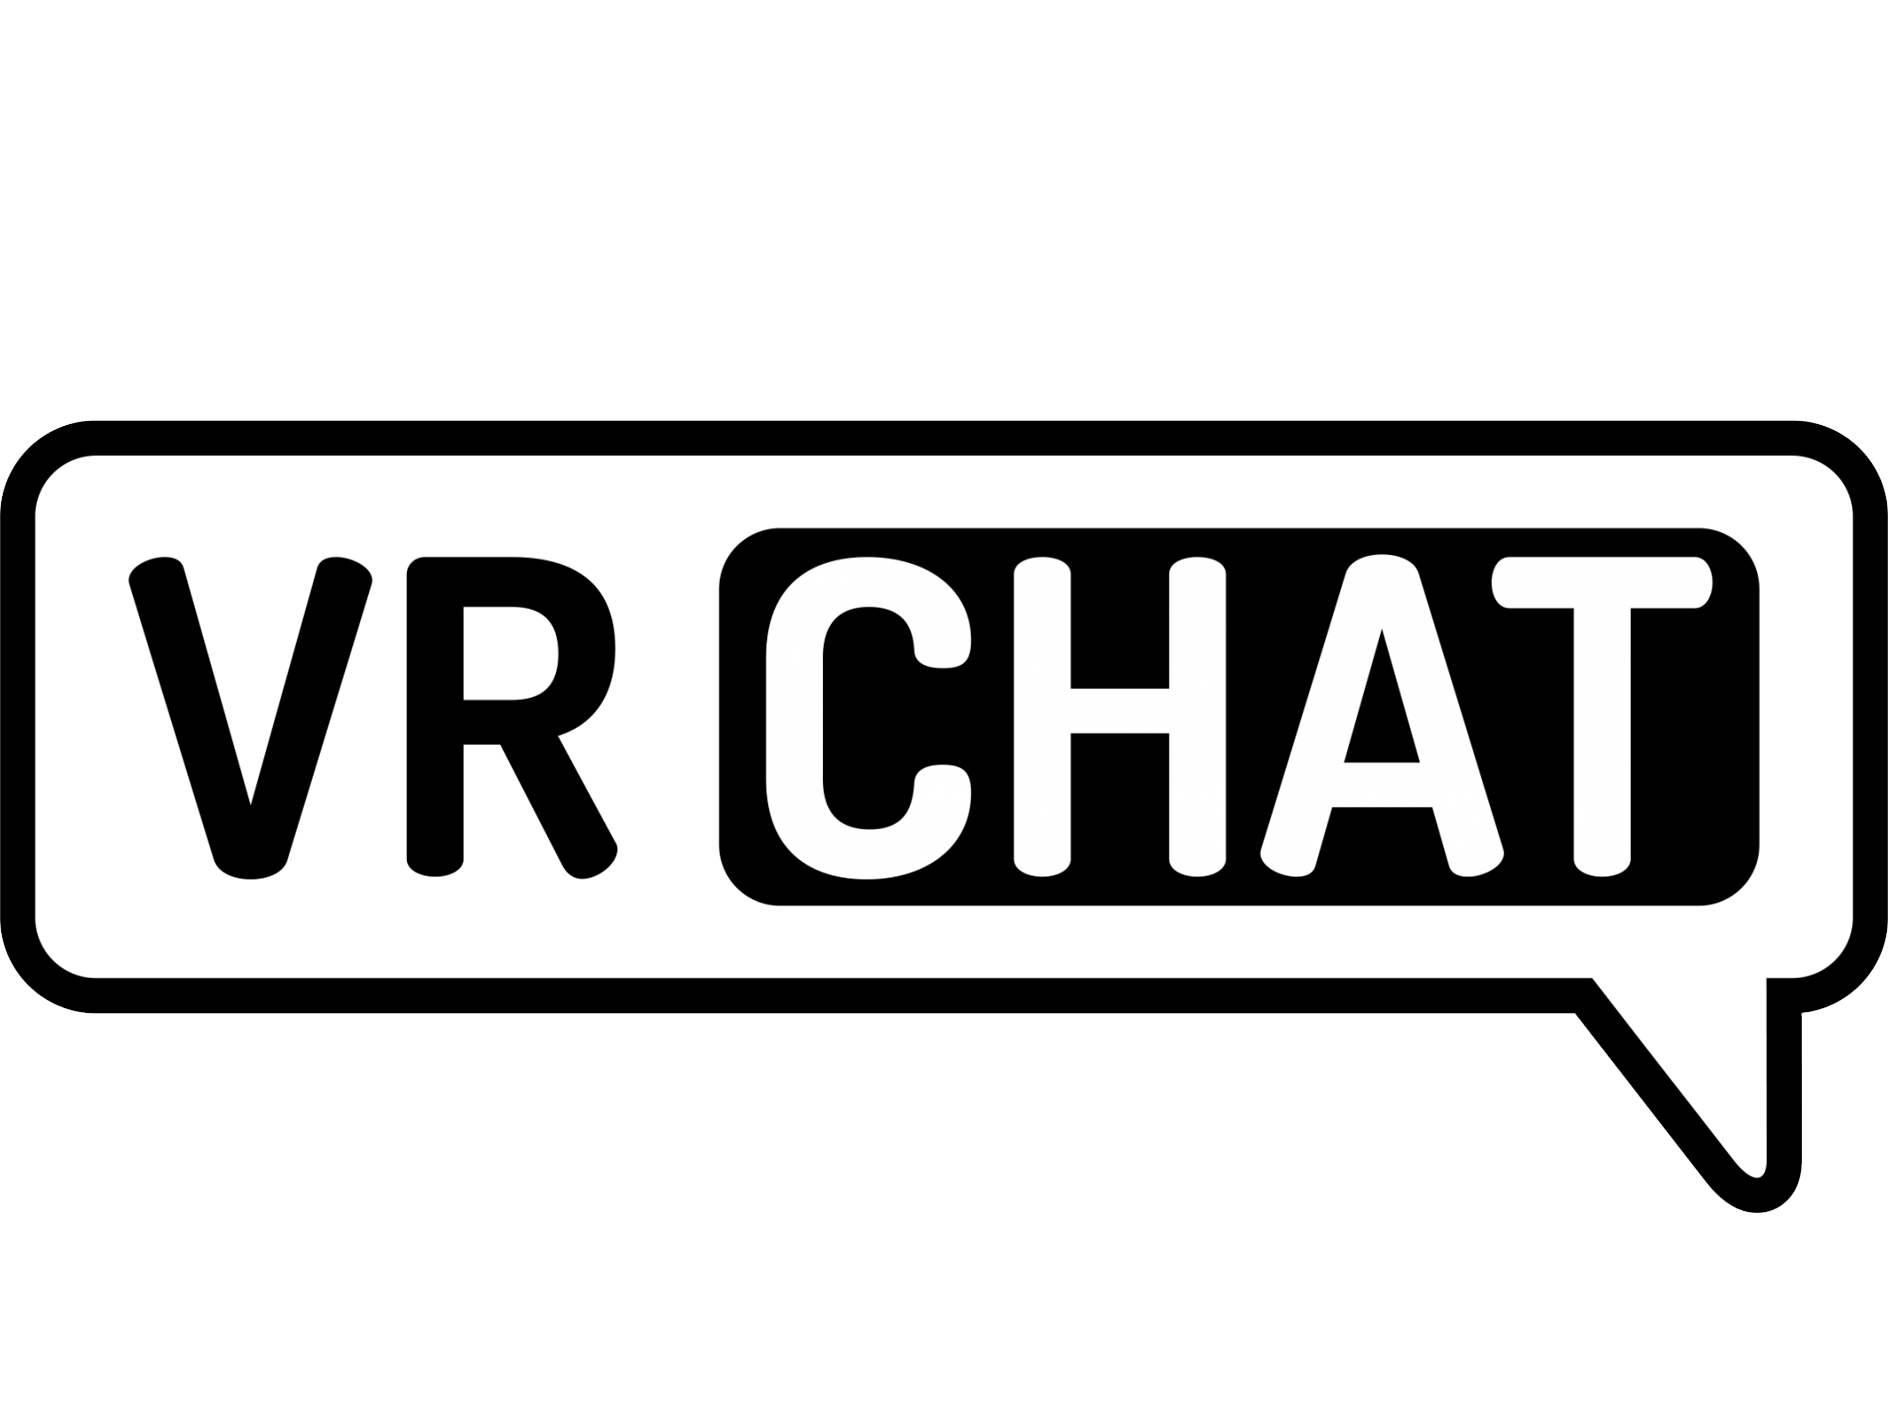 VRChat Logo - VRChat | VRChat Legends Wiki | FANDOM powered by Wikia